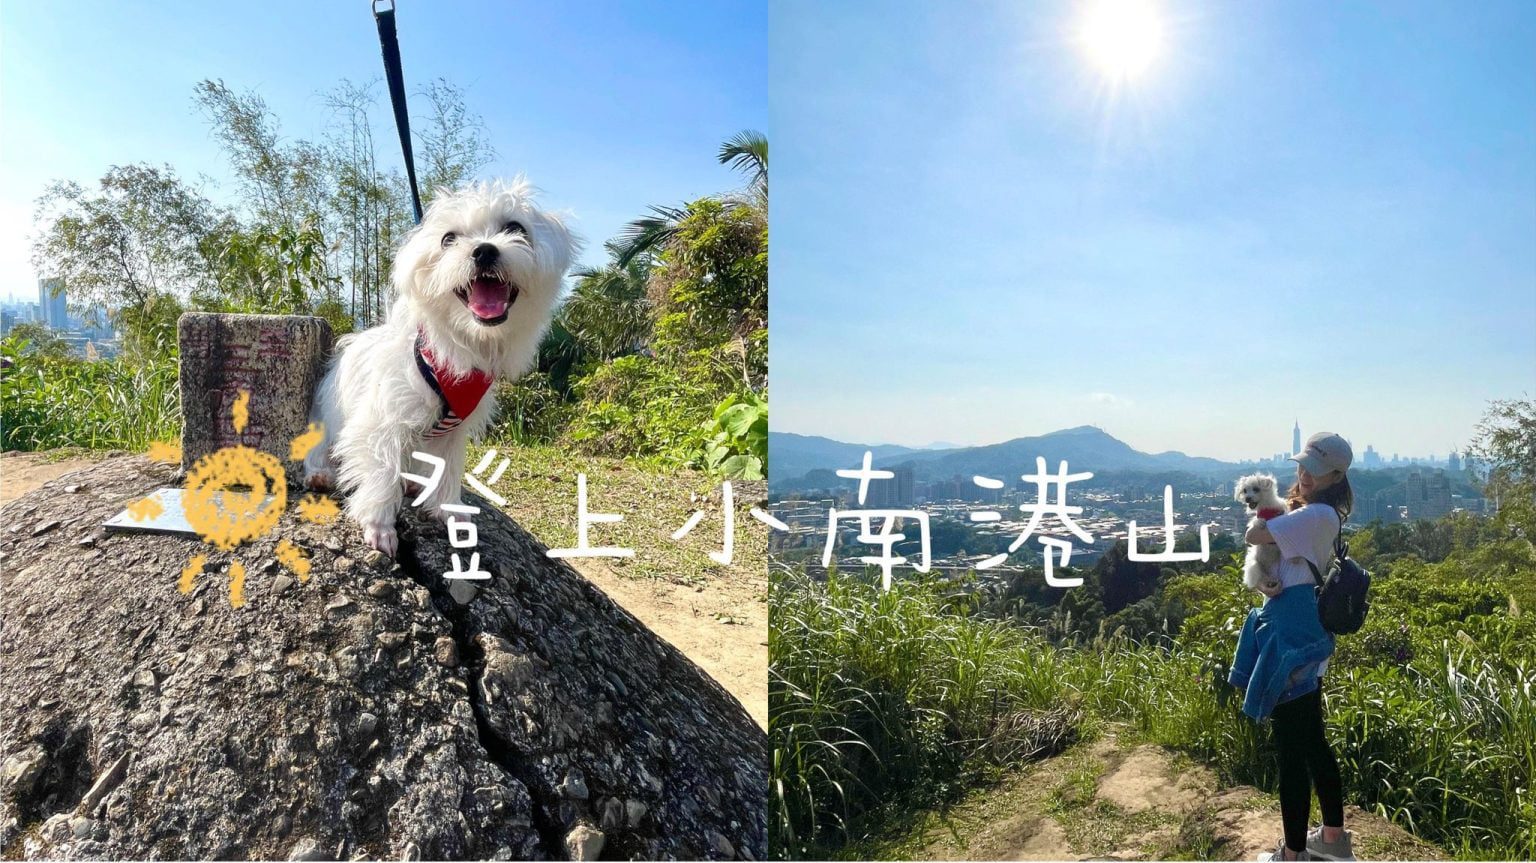 petsyoyo寵物新聞媒體平台-小南港山 台北寵物友善景點 嚕咪醬的玩樂生活